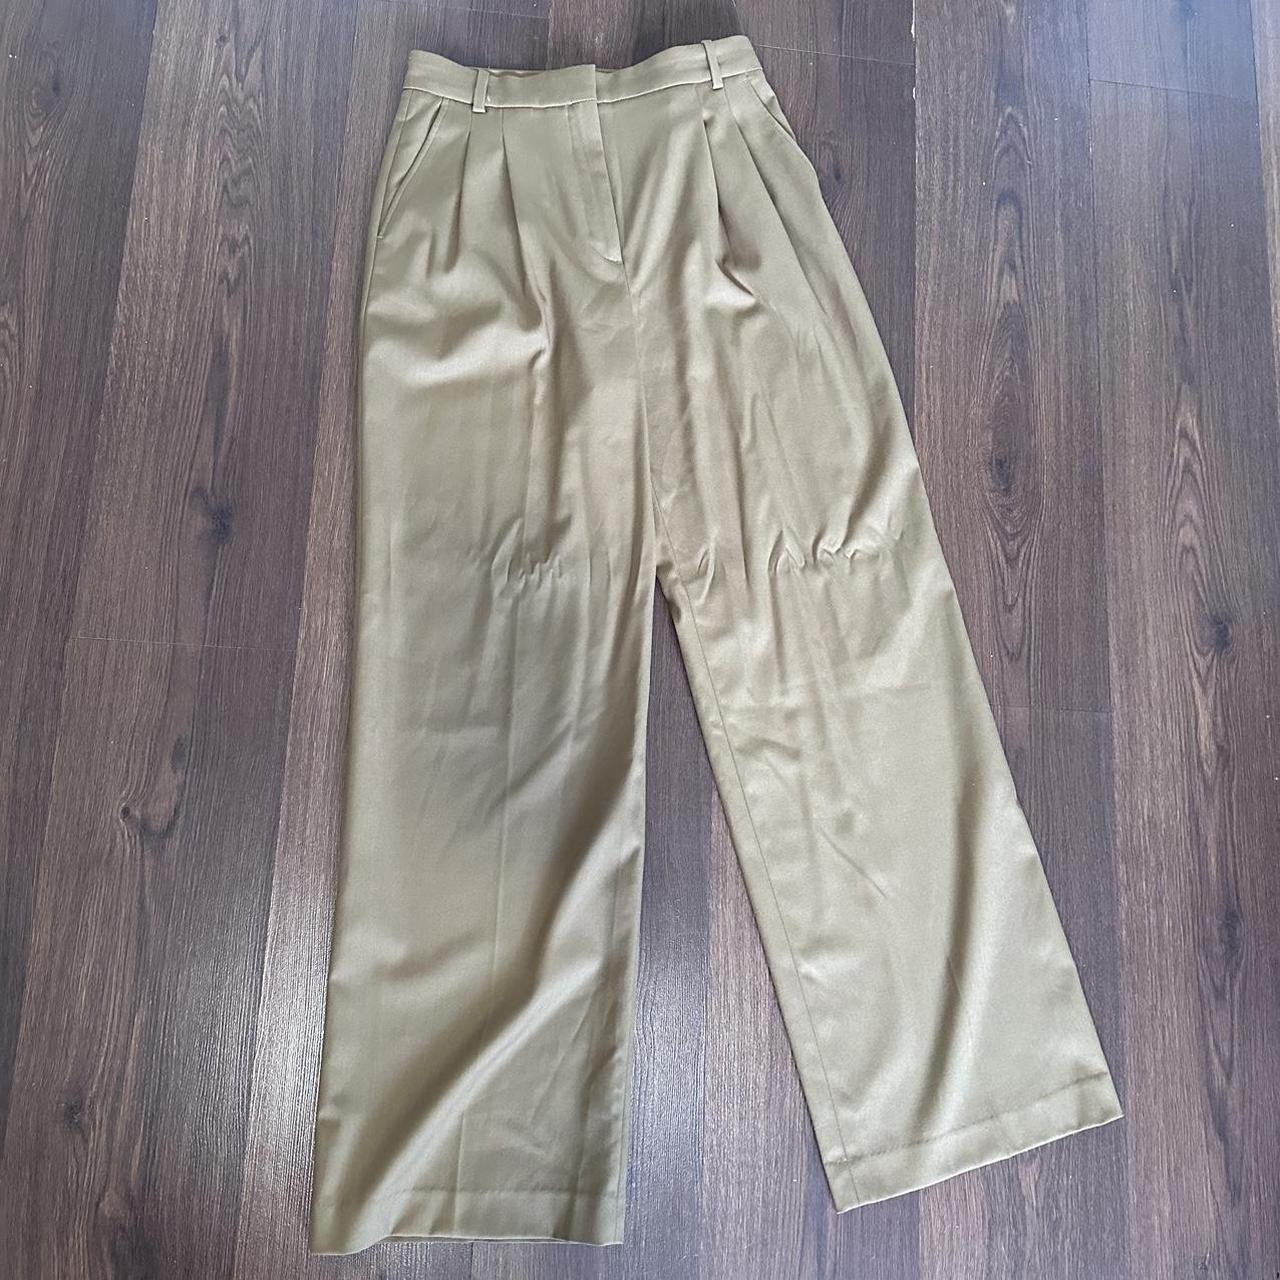 Zara brown pants